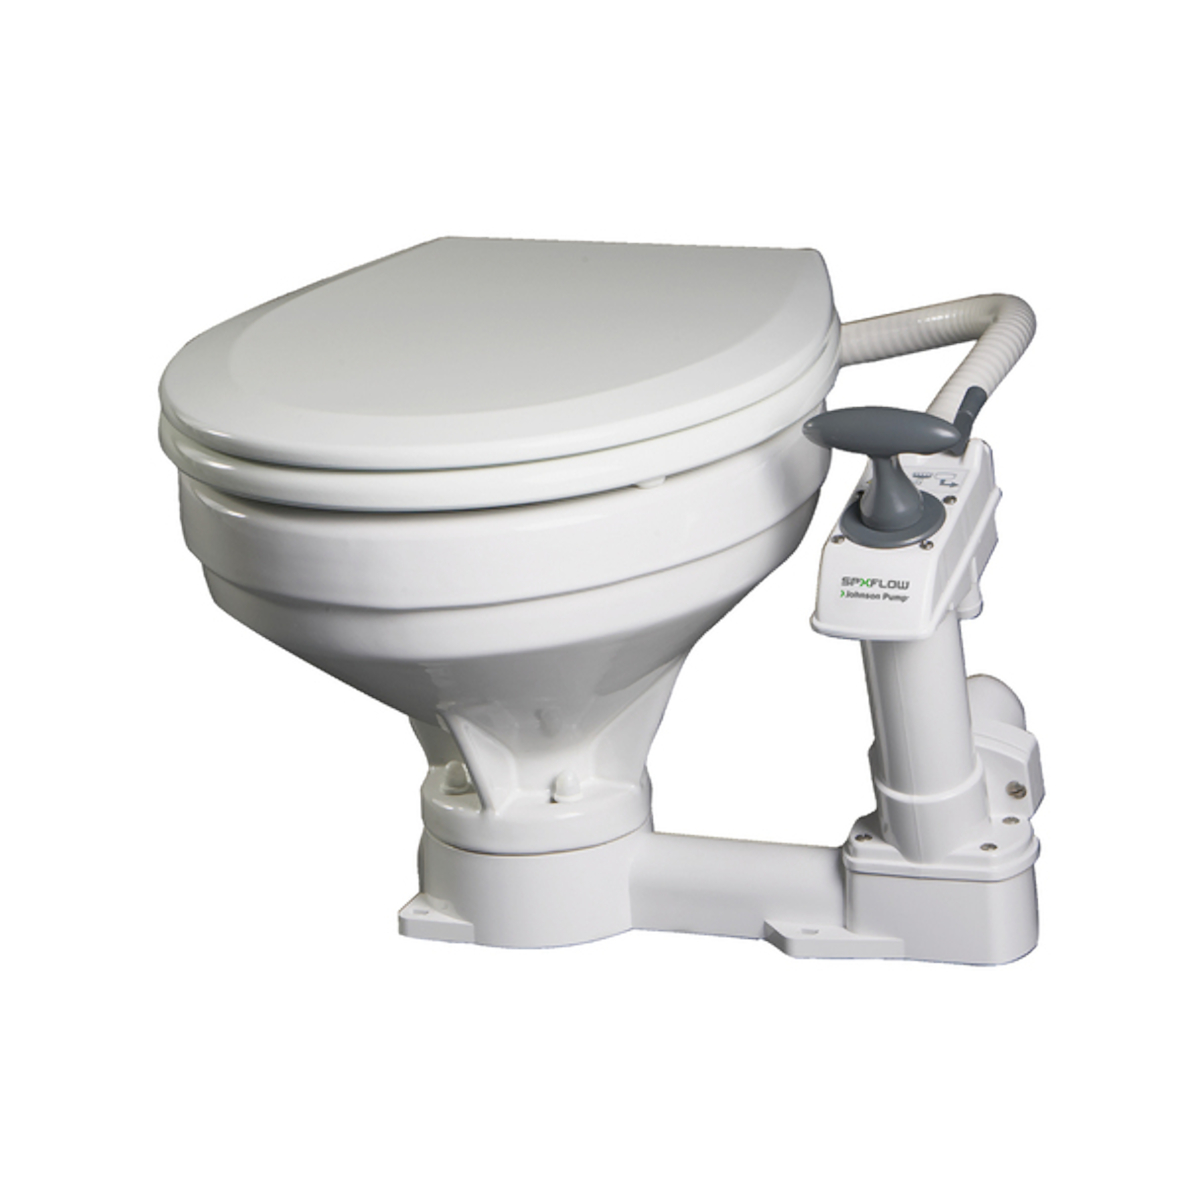 Johnson AquaT Manual Comfort toilet